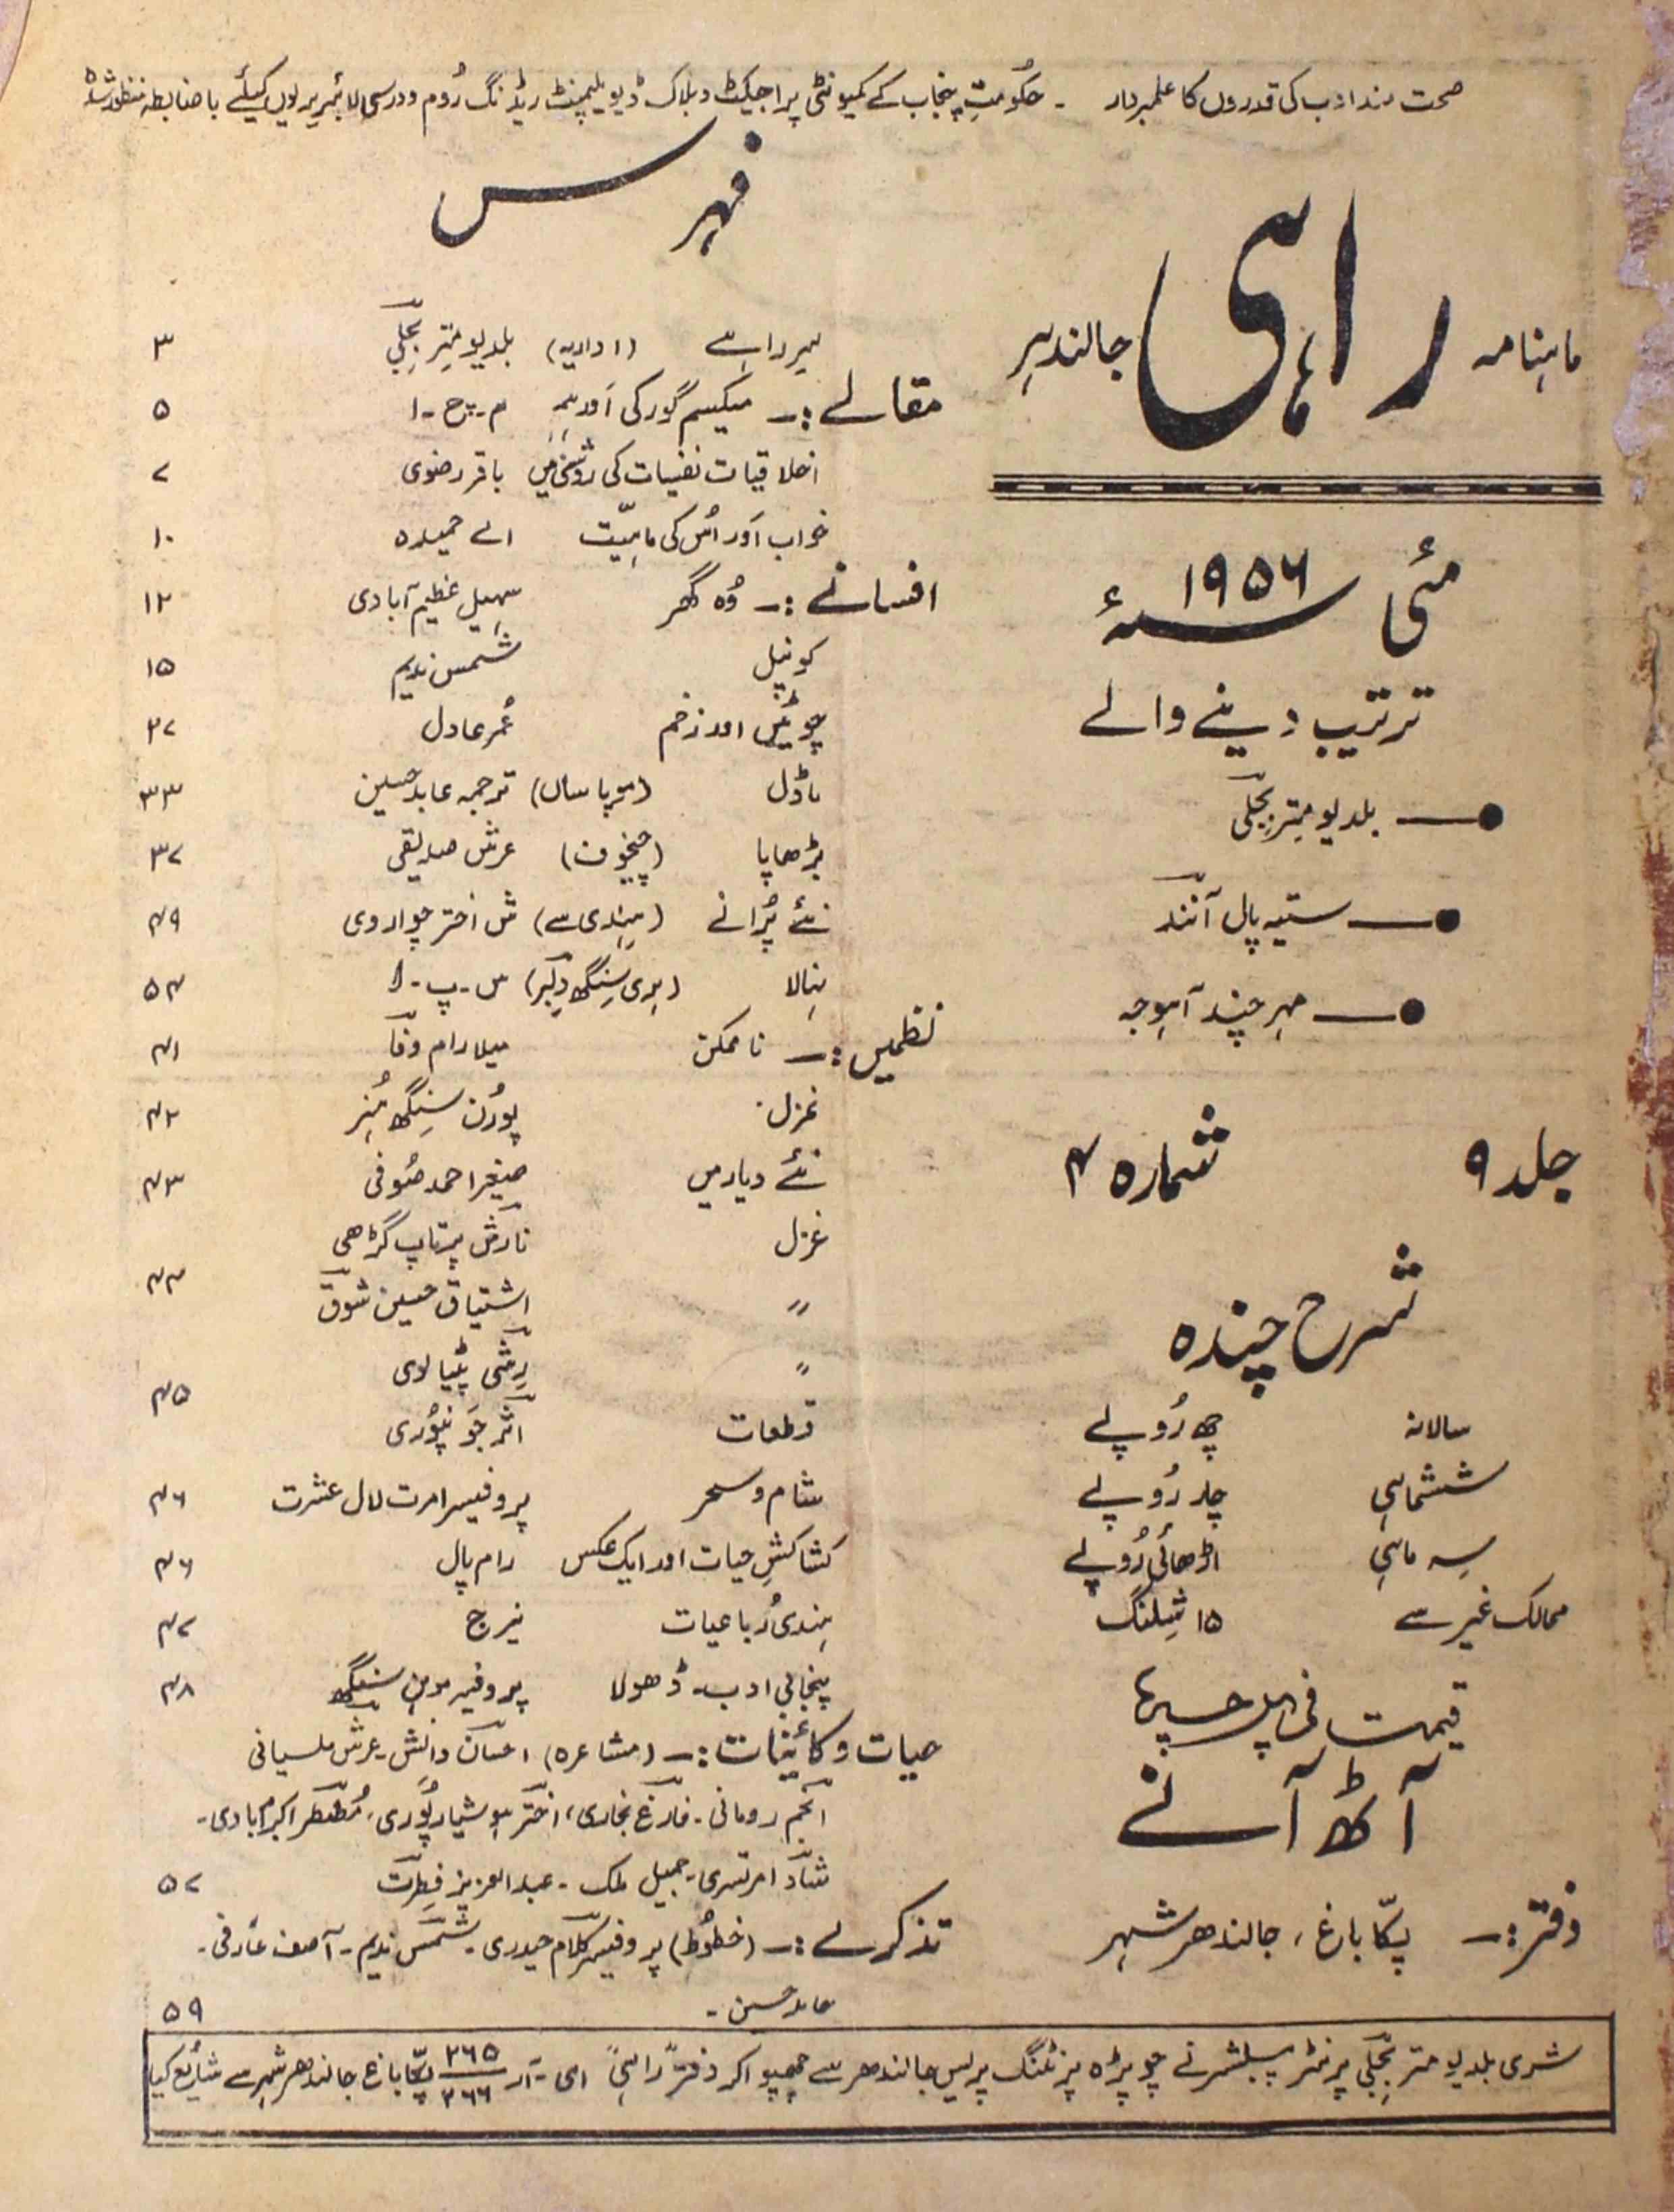 Rahi Jild 9 Shumara 4 May 1956-Svk-Shumara Number-004